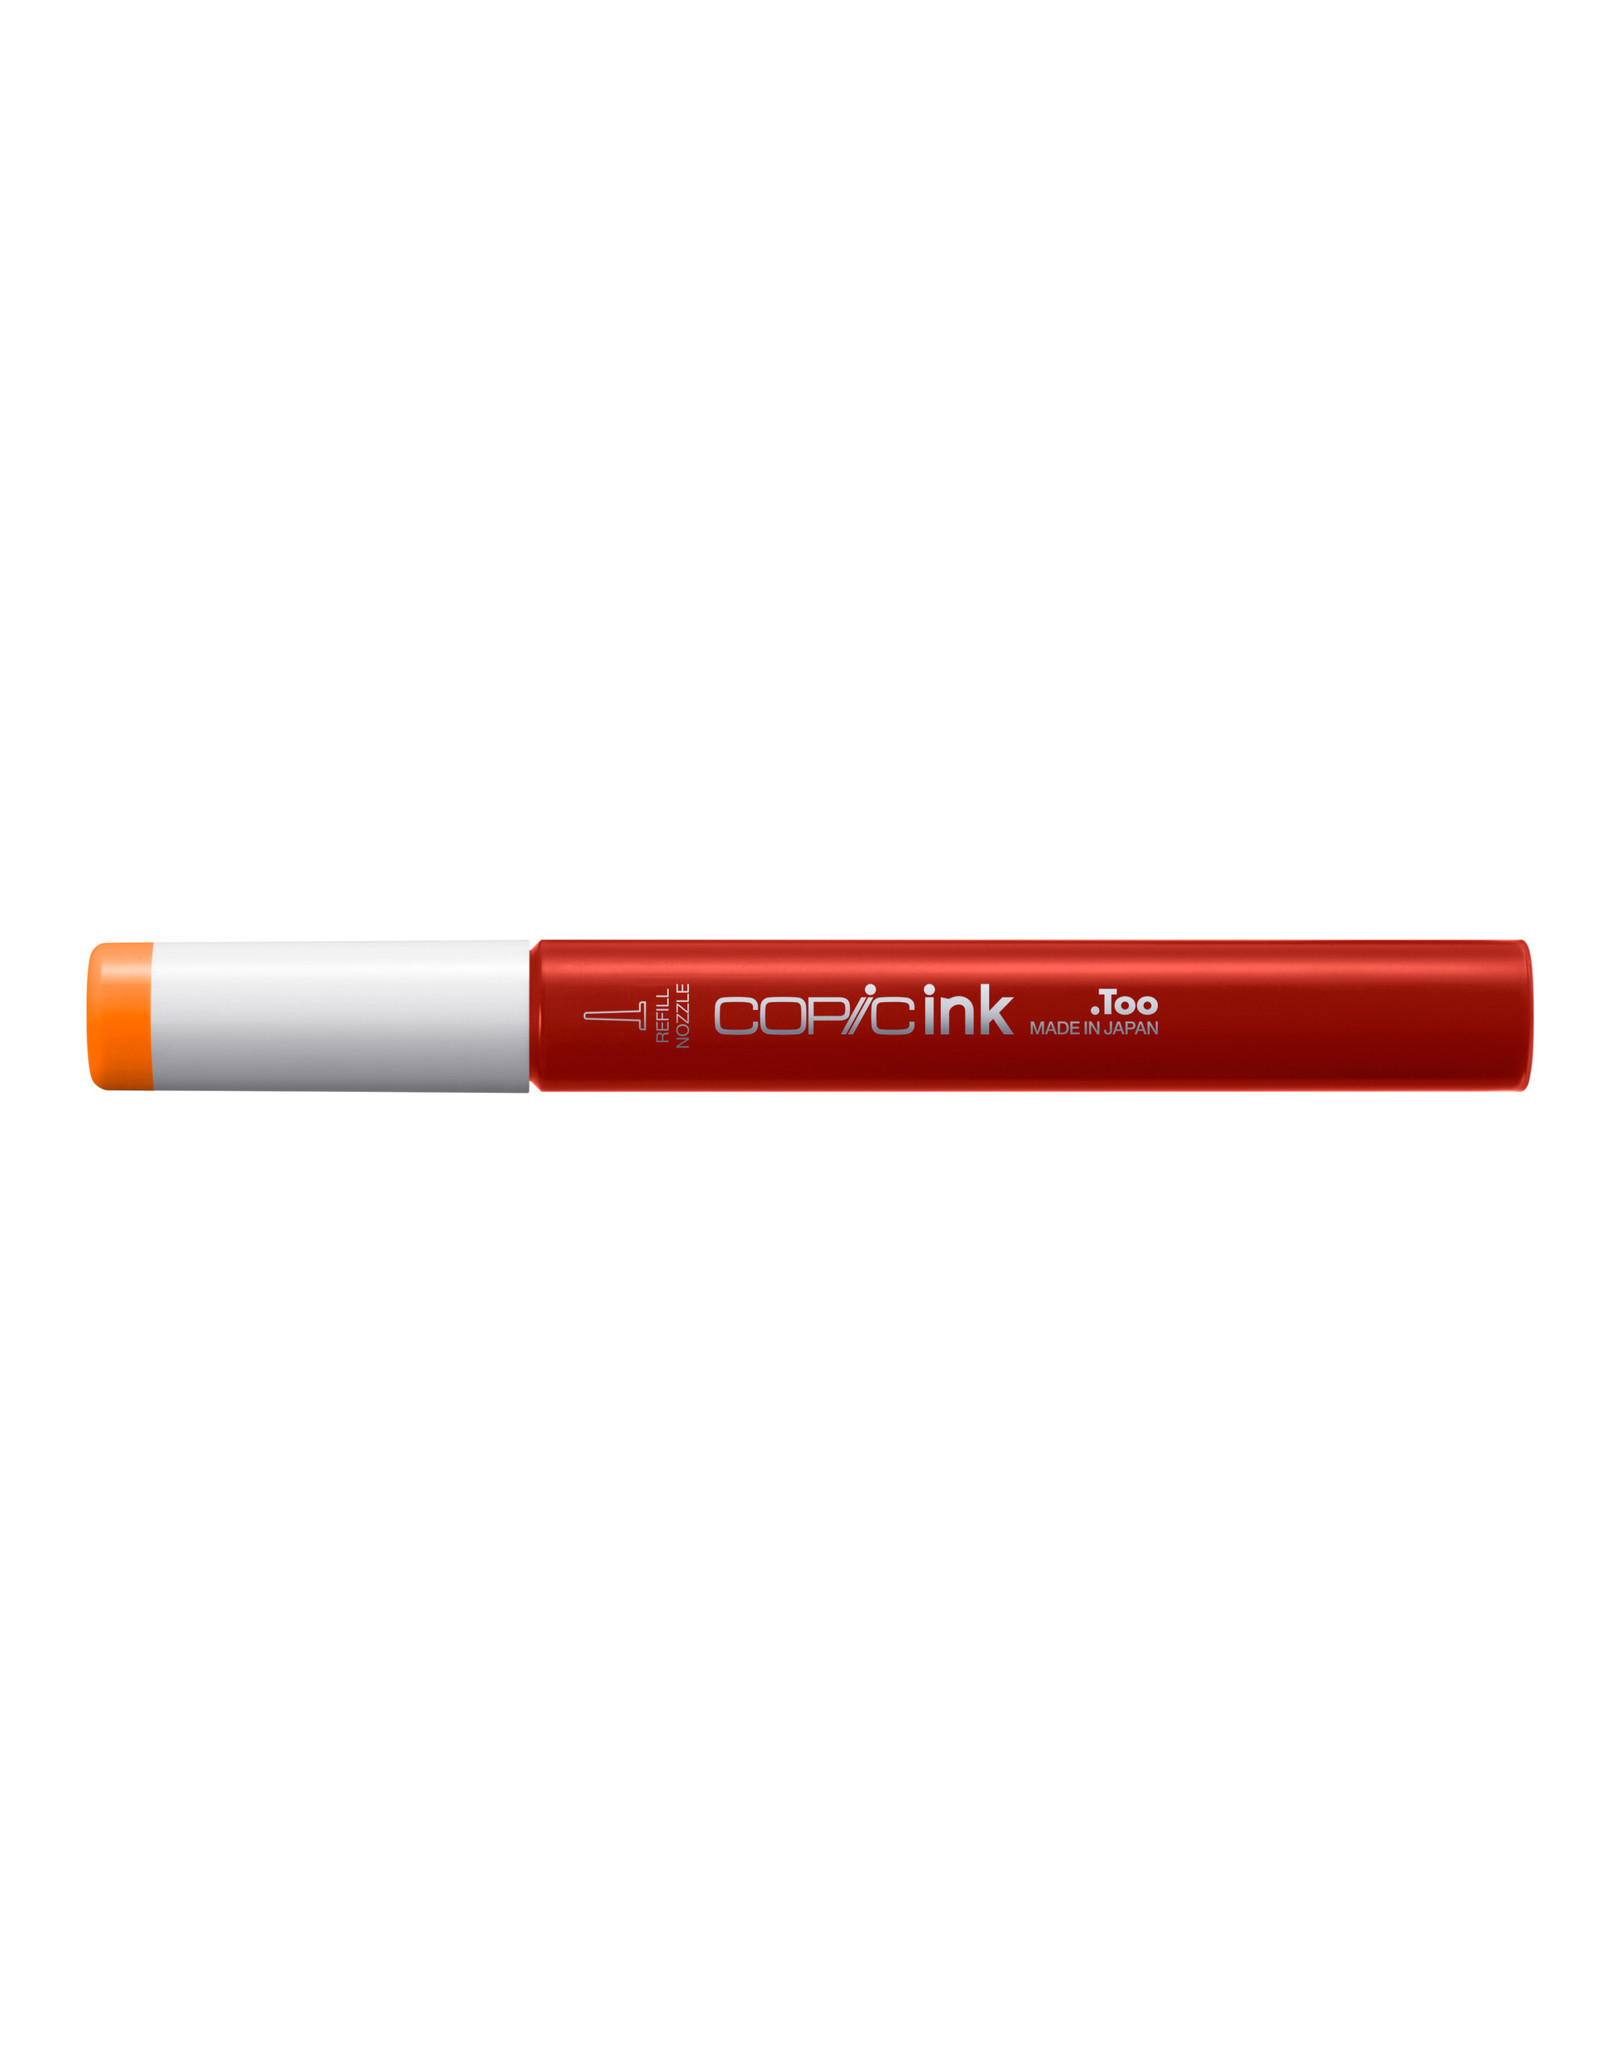 COPIC COPIC Ink 12ml YR04 Chrome Orange